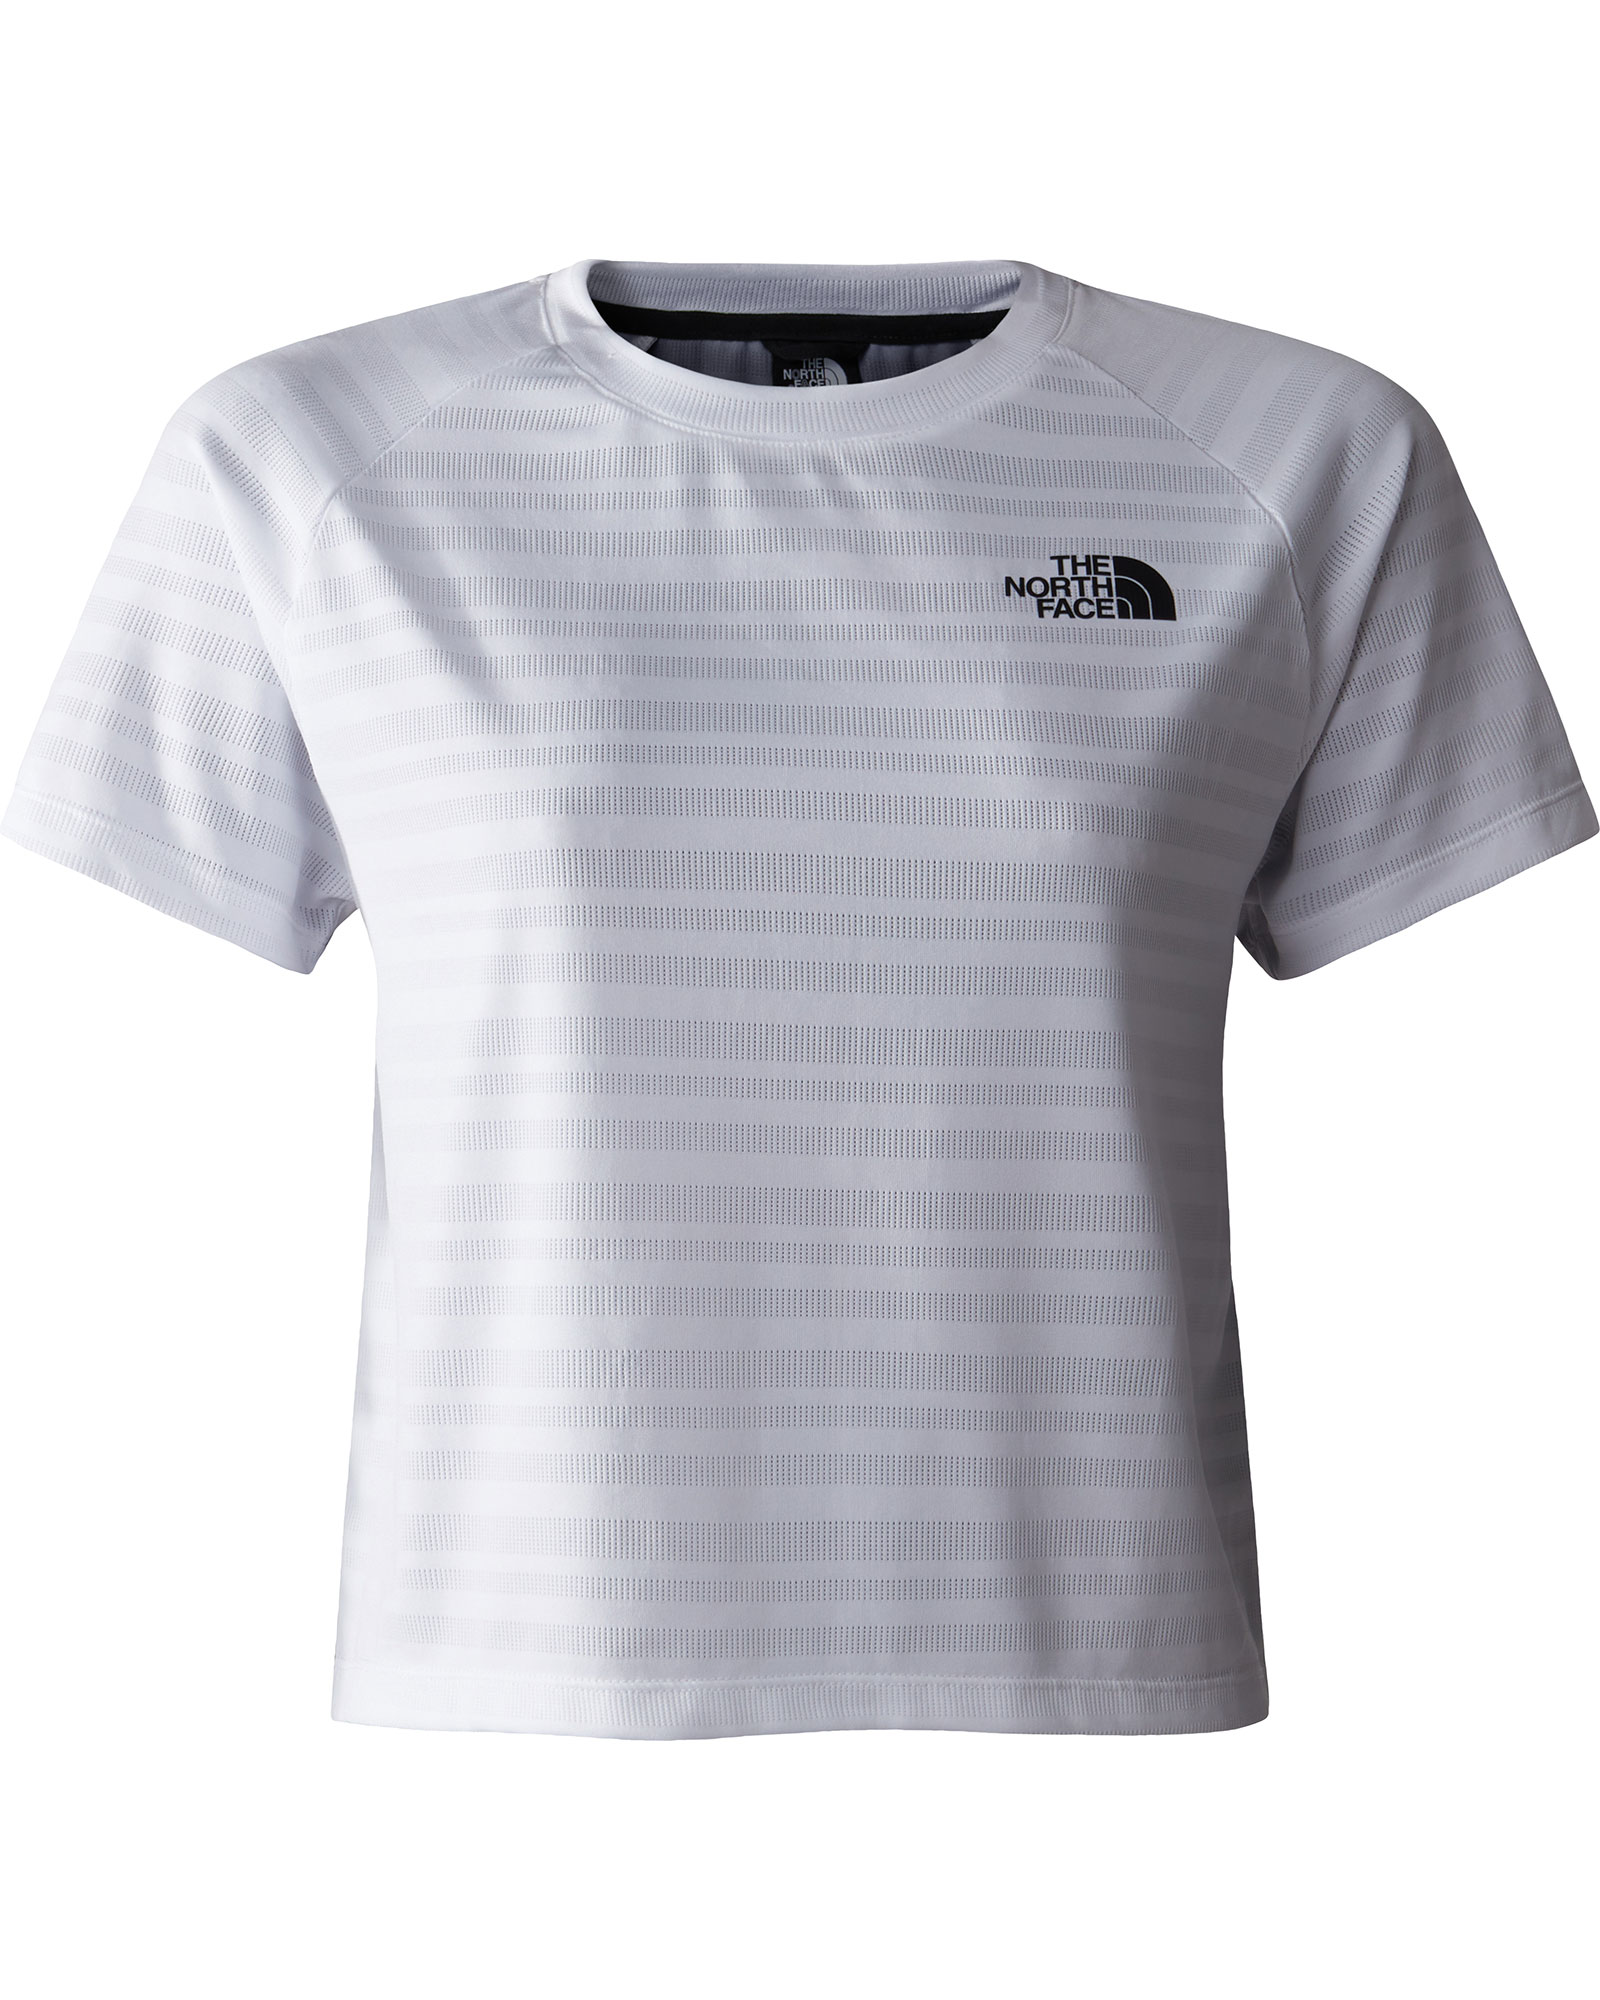 The North Face Women’s MA T Shirt - TNF White-Asphalt Grey M